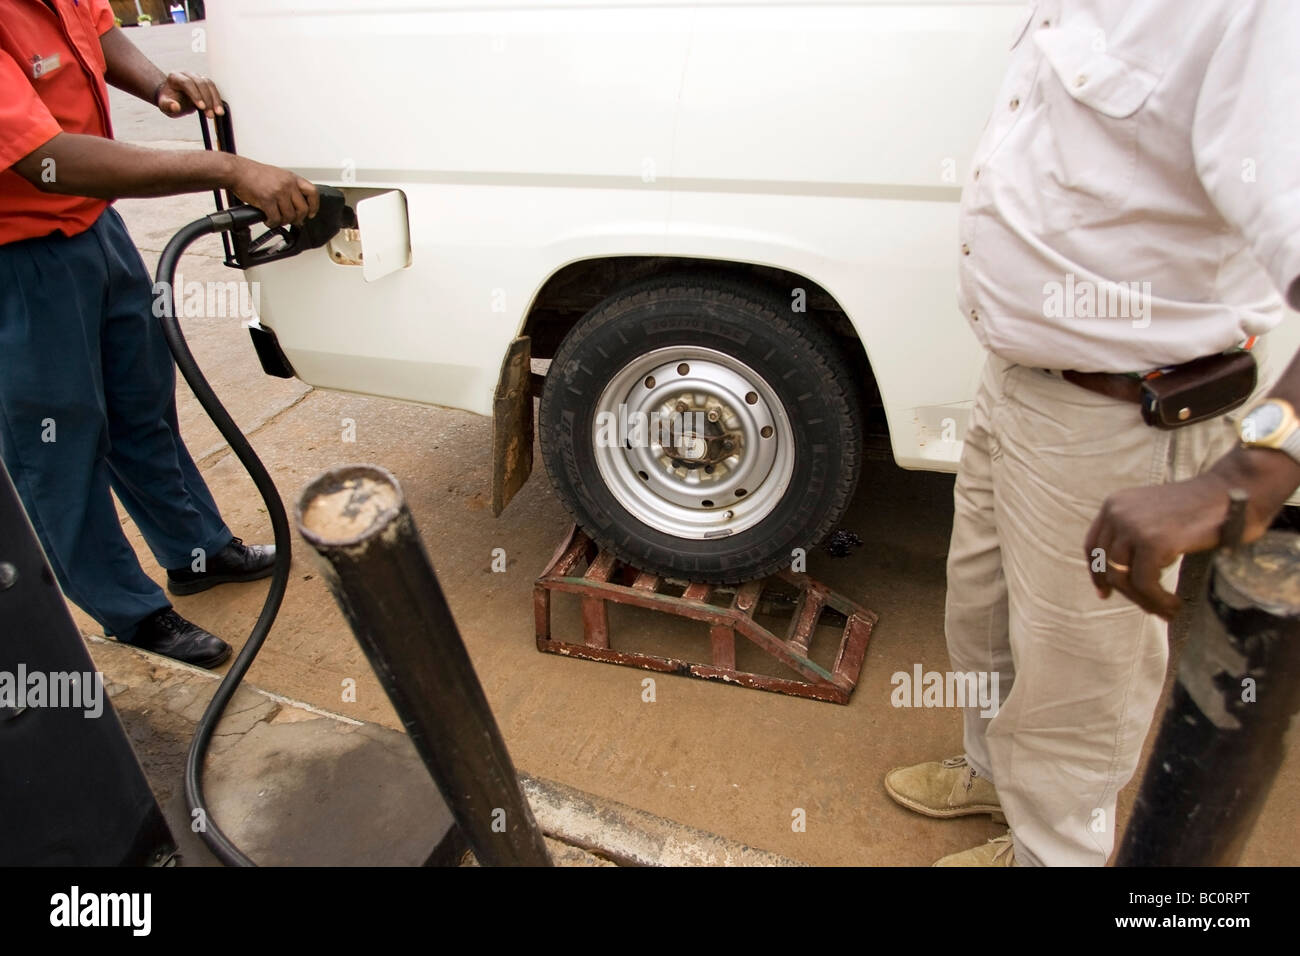 Filling up vehicle at gas station - near Mombasa, Kenya Stock Photo